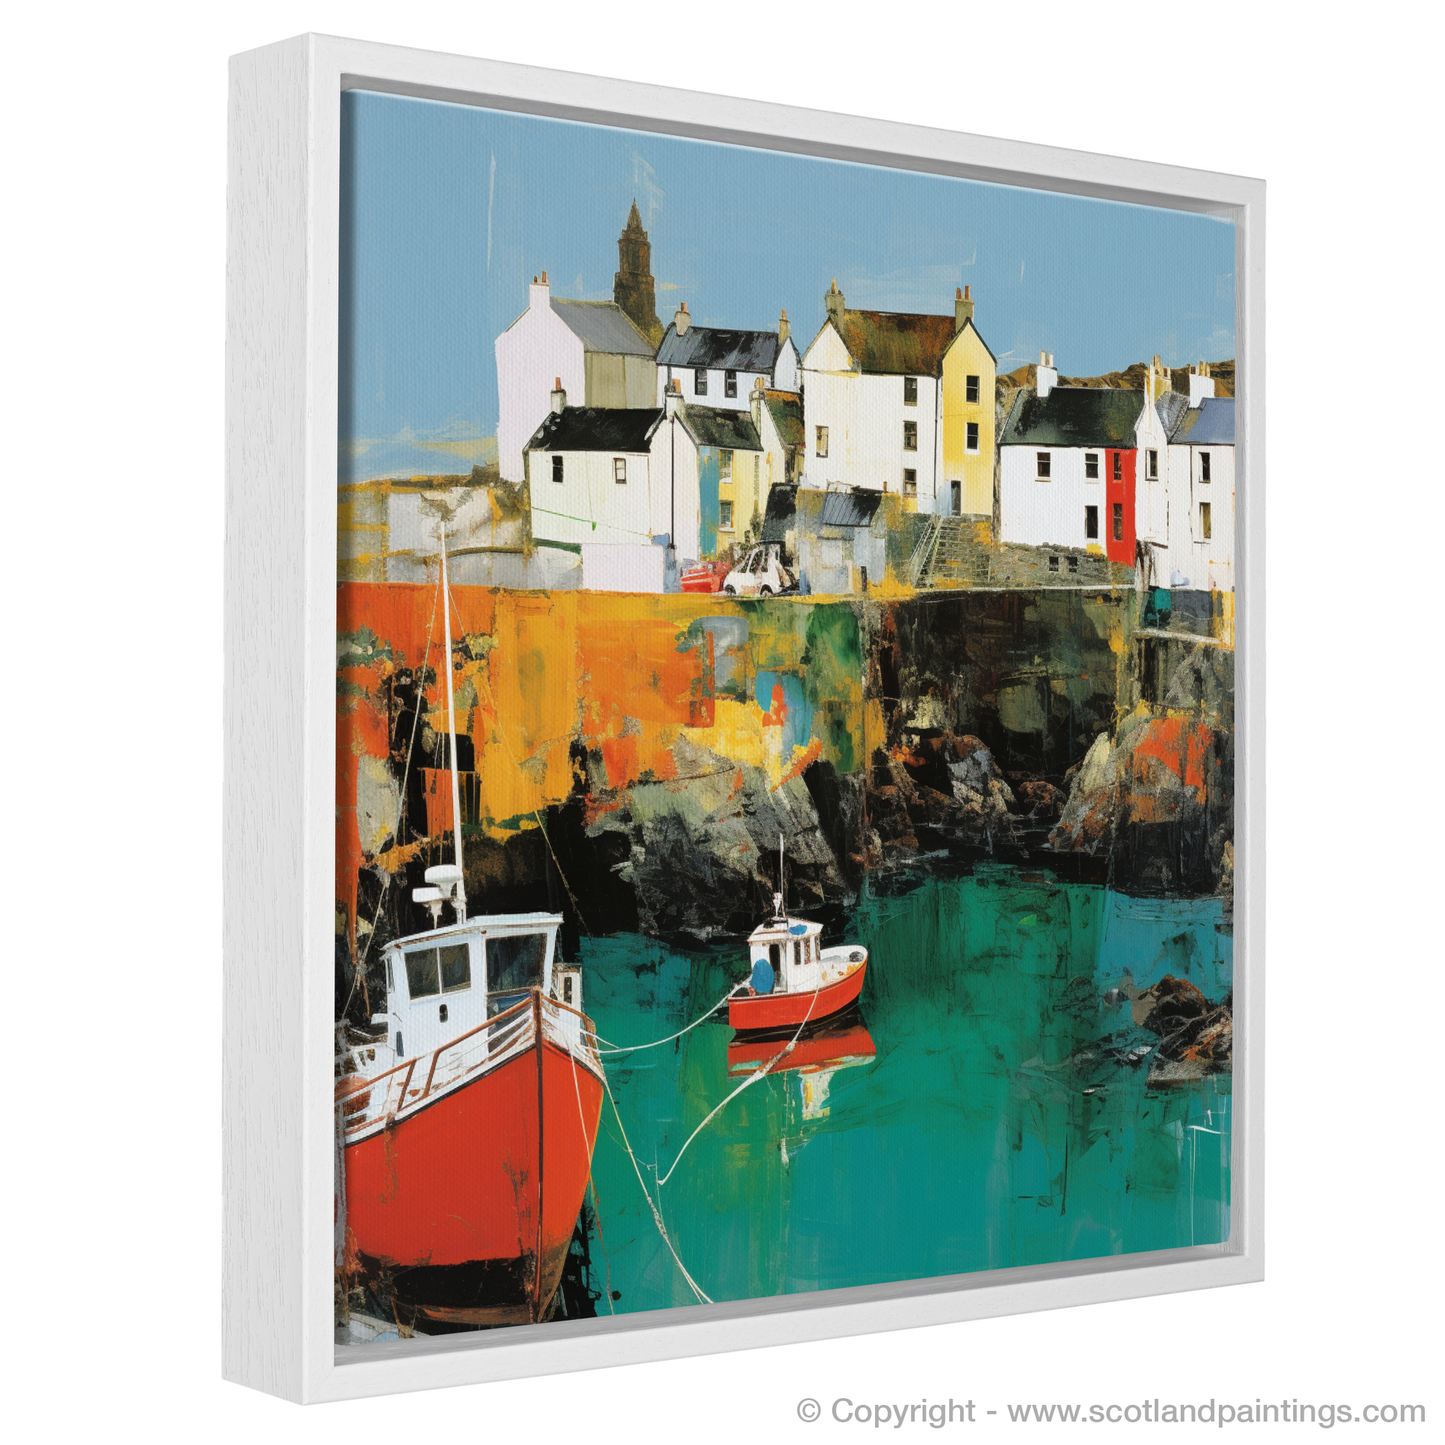 Pop Art Portpatrick: A Colourful Coastal Rendition